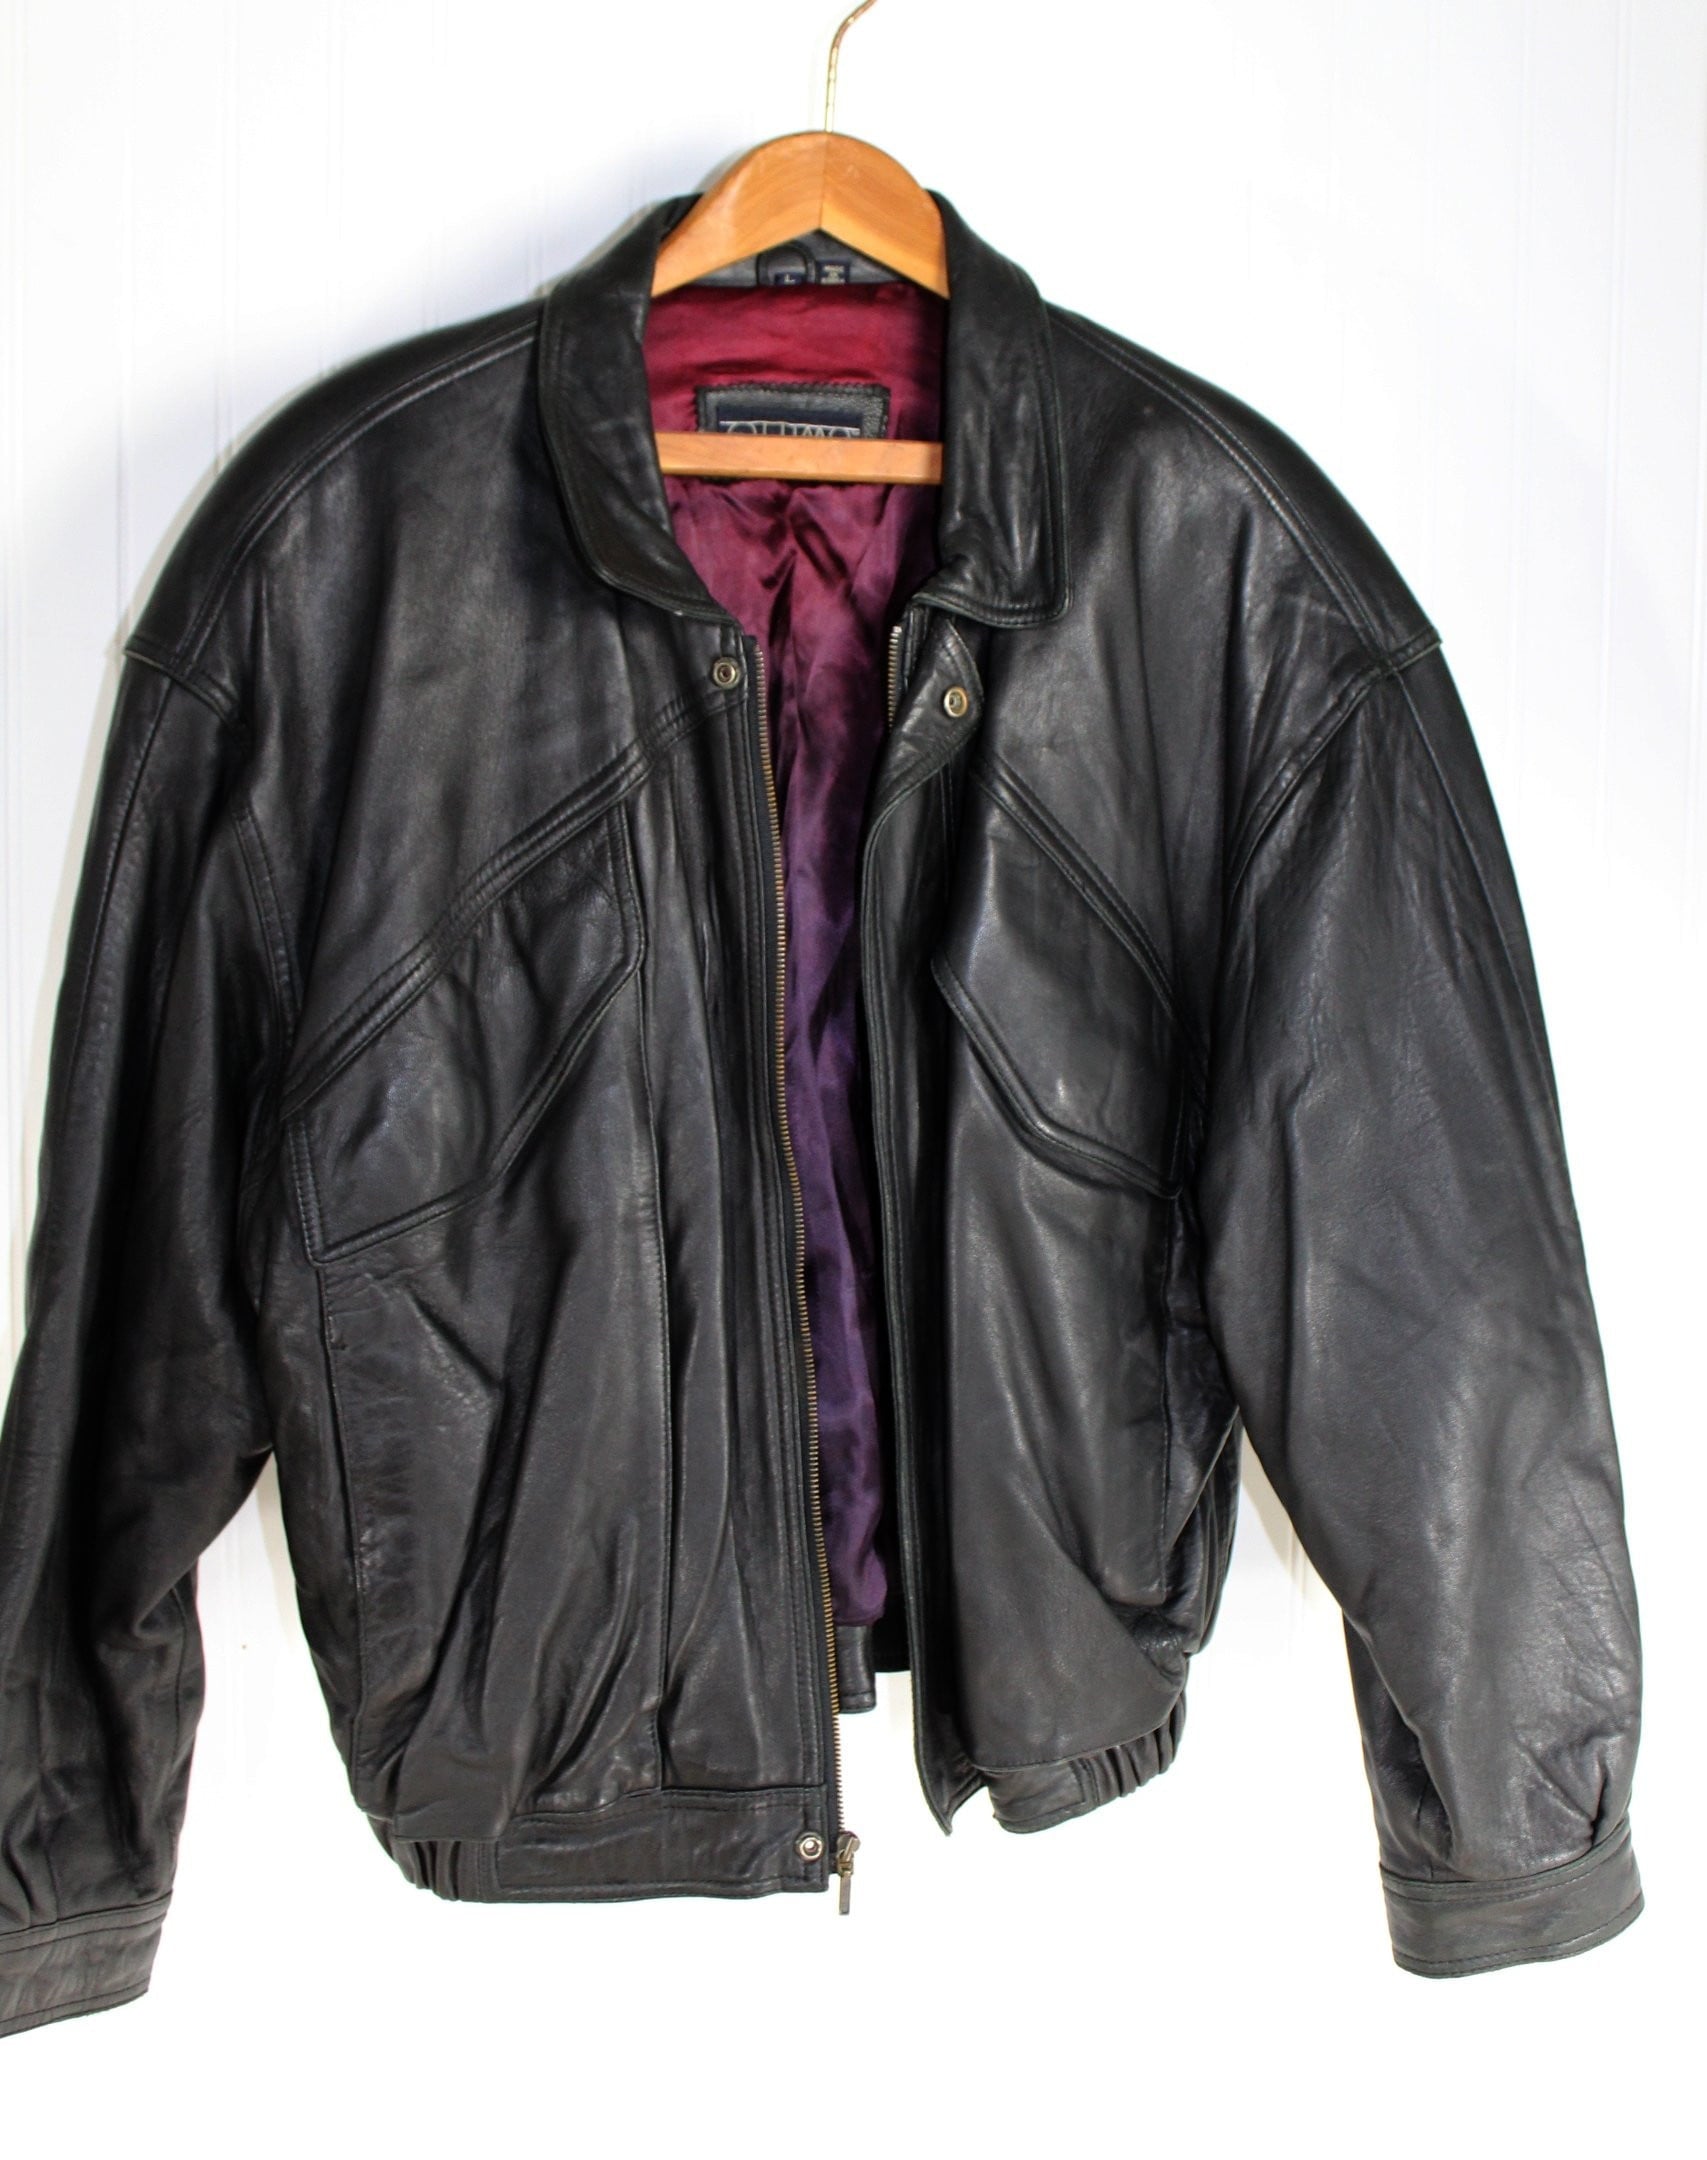 Ottimo Leather Black Bomber Jacket L Vintage - Soft Supple Warm